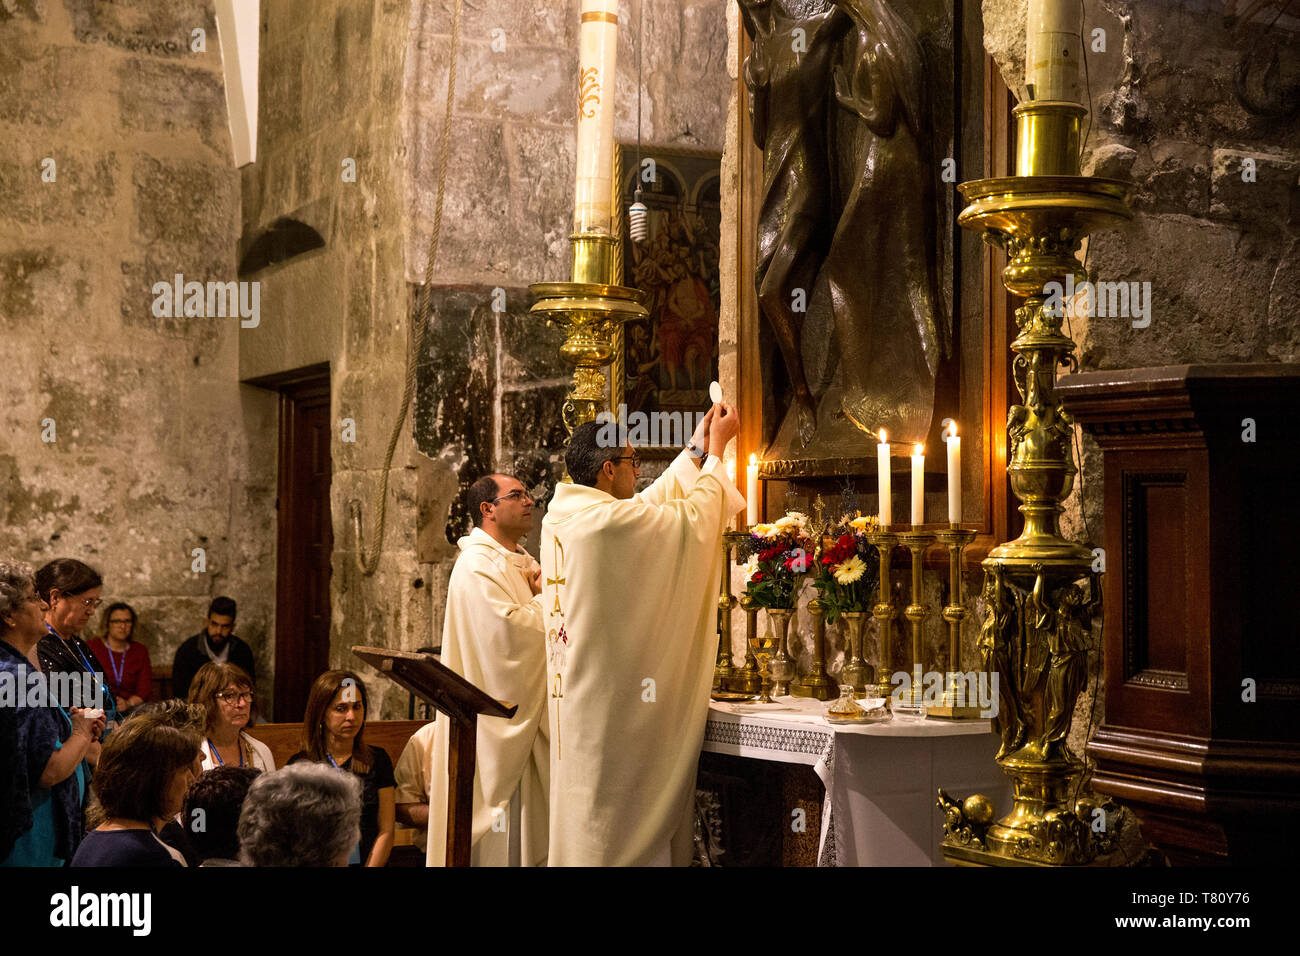 Catholic pilgrims worshipping at the Church of the Holy Sepulchre, Jerusalem, Israel, Middle East Stock Photo